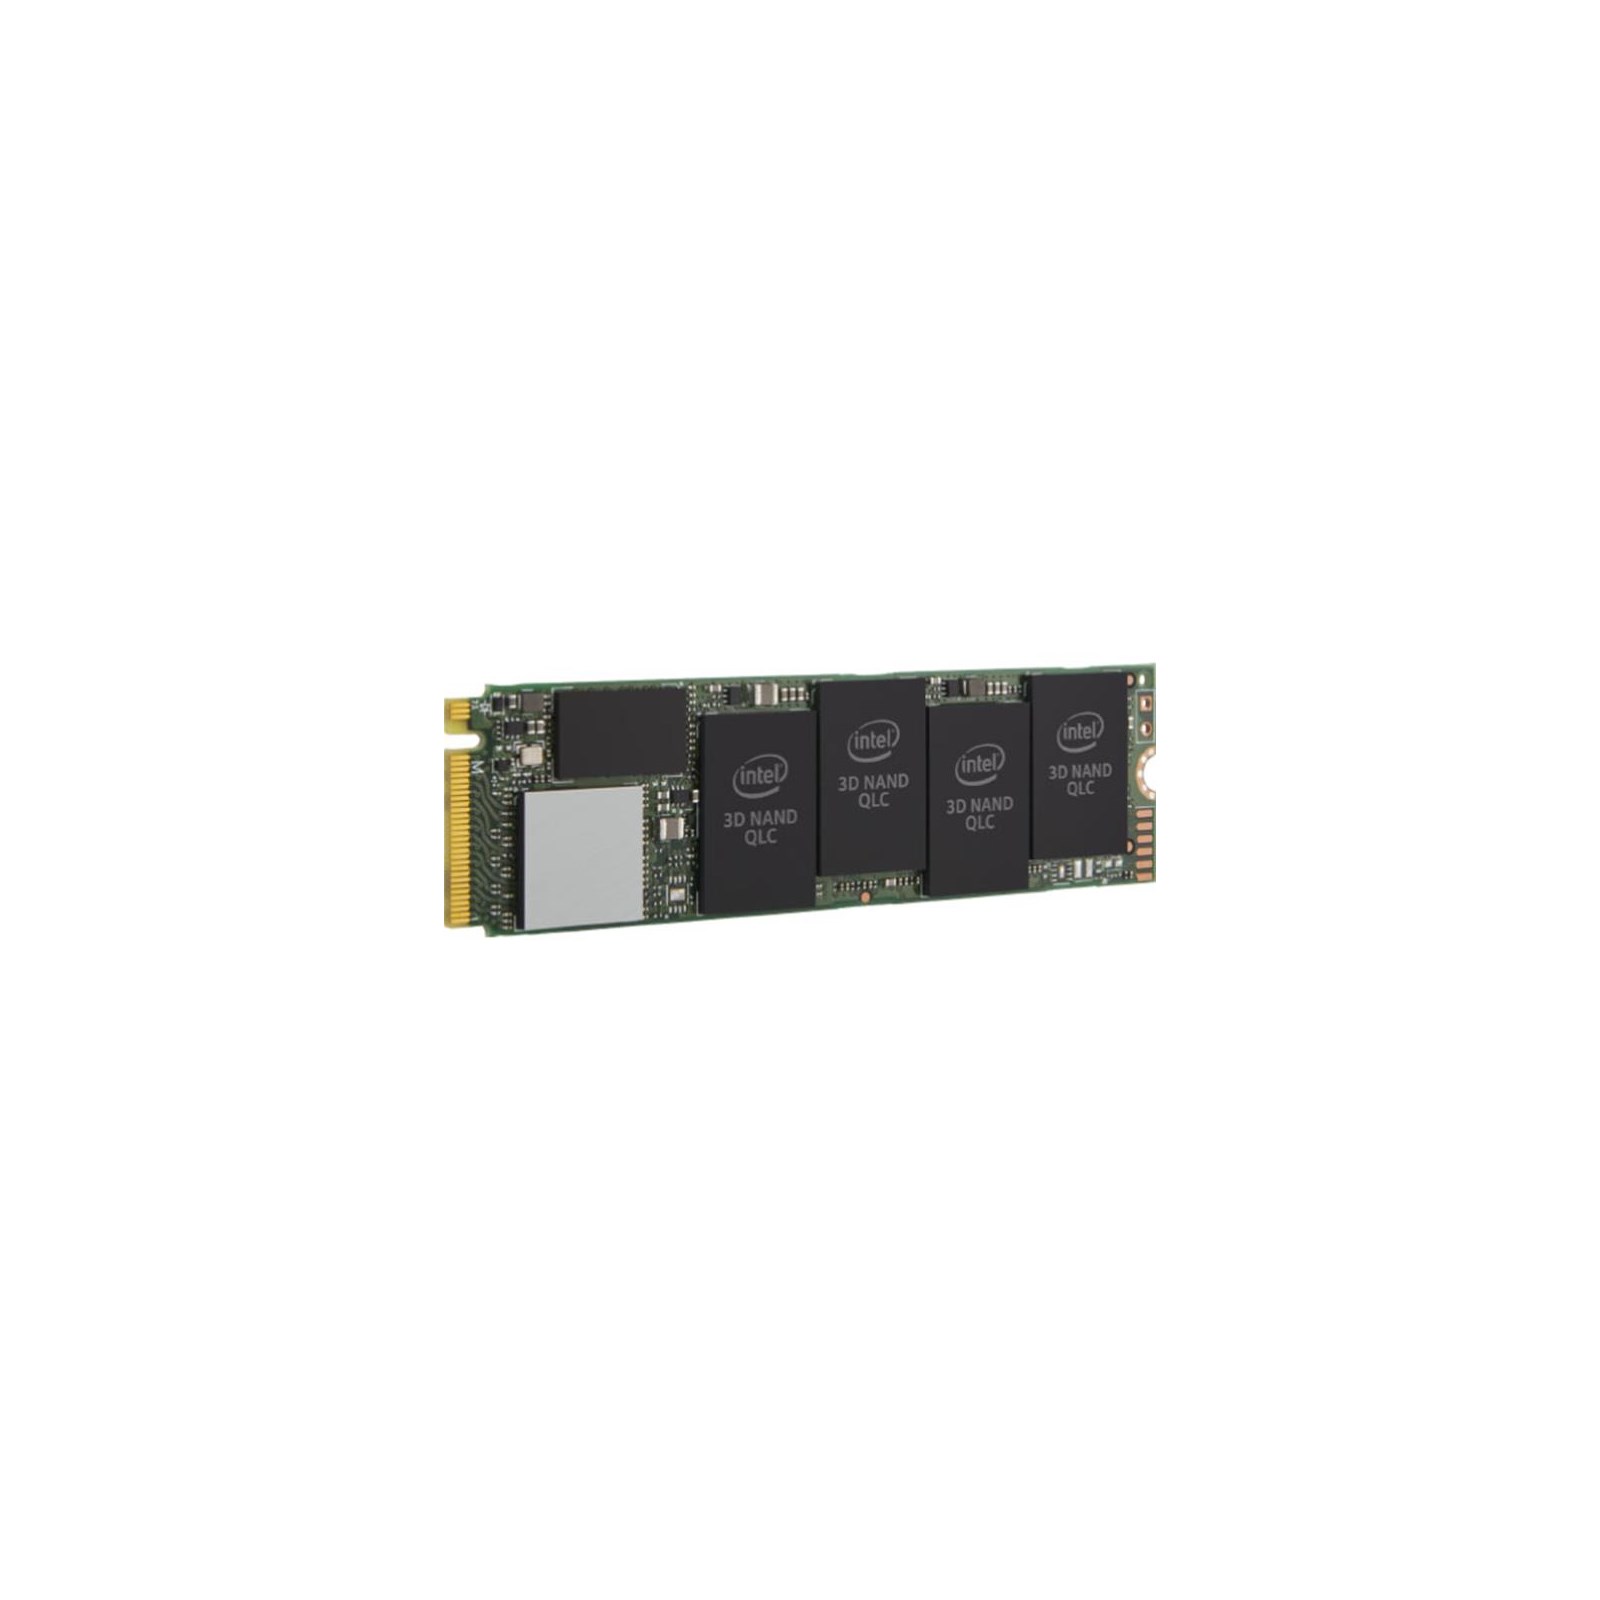 SSD 660p M.2-2280 PCIe 3.0 x4 SSD - SSDPEKNW512G8X1 | CCL